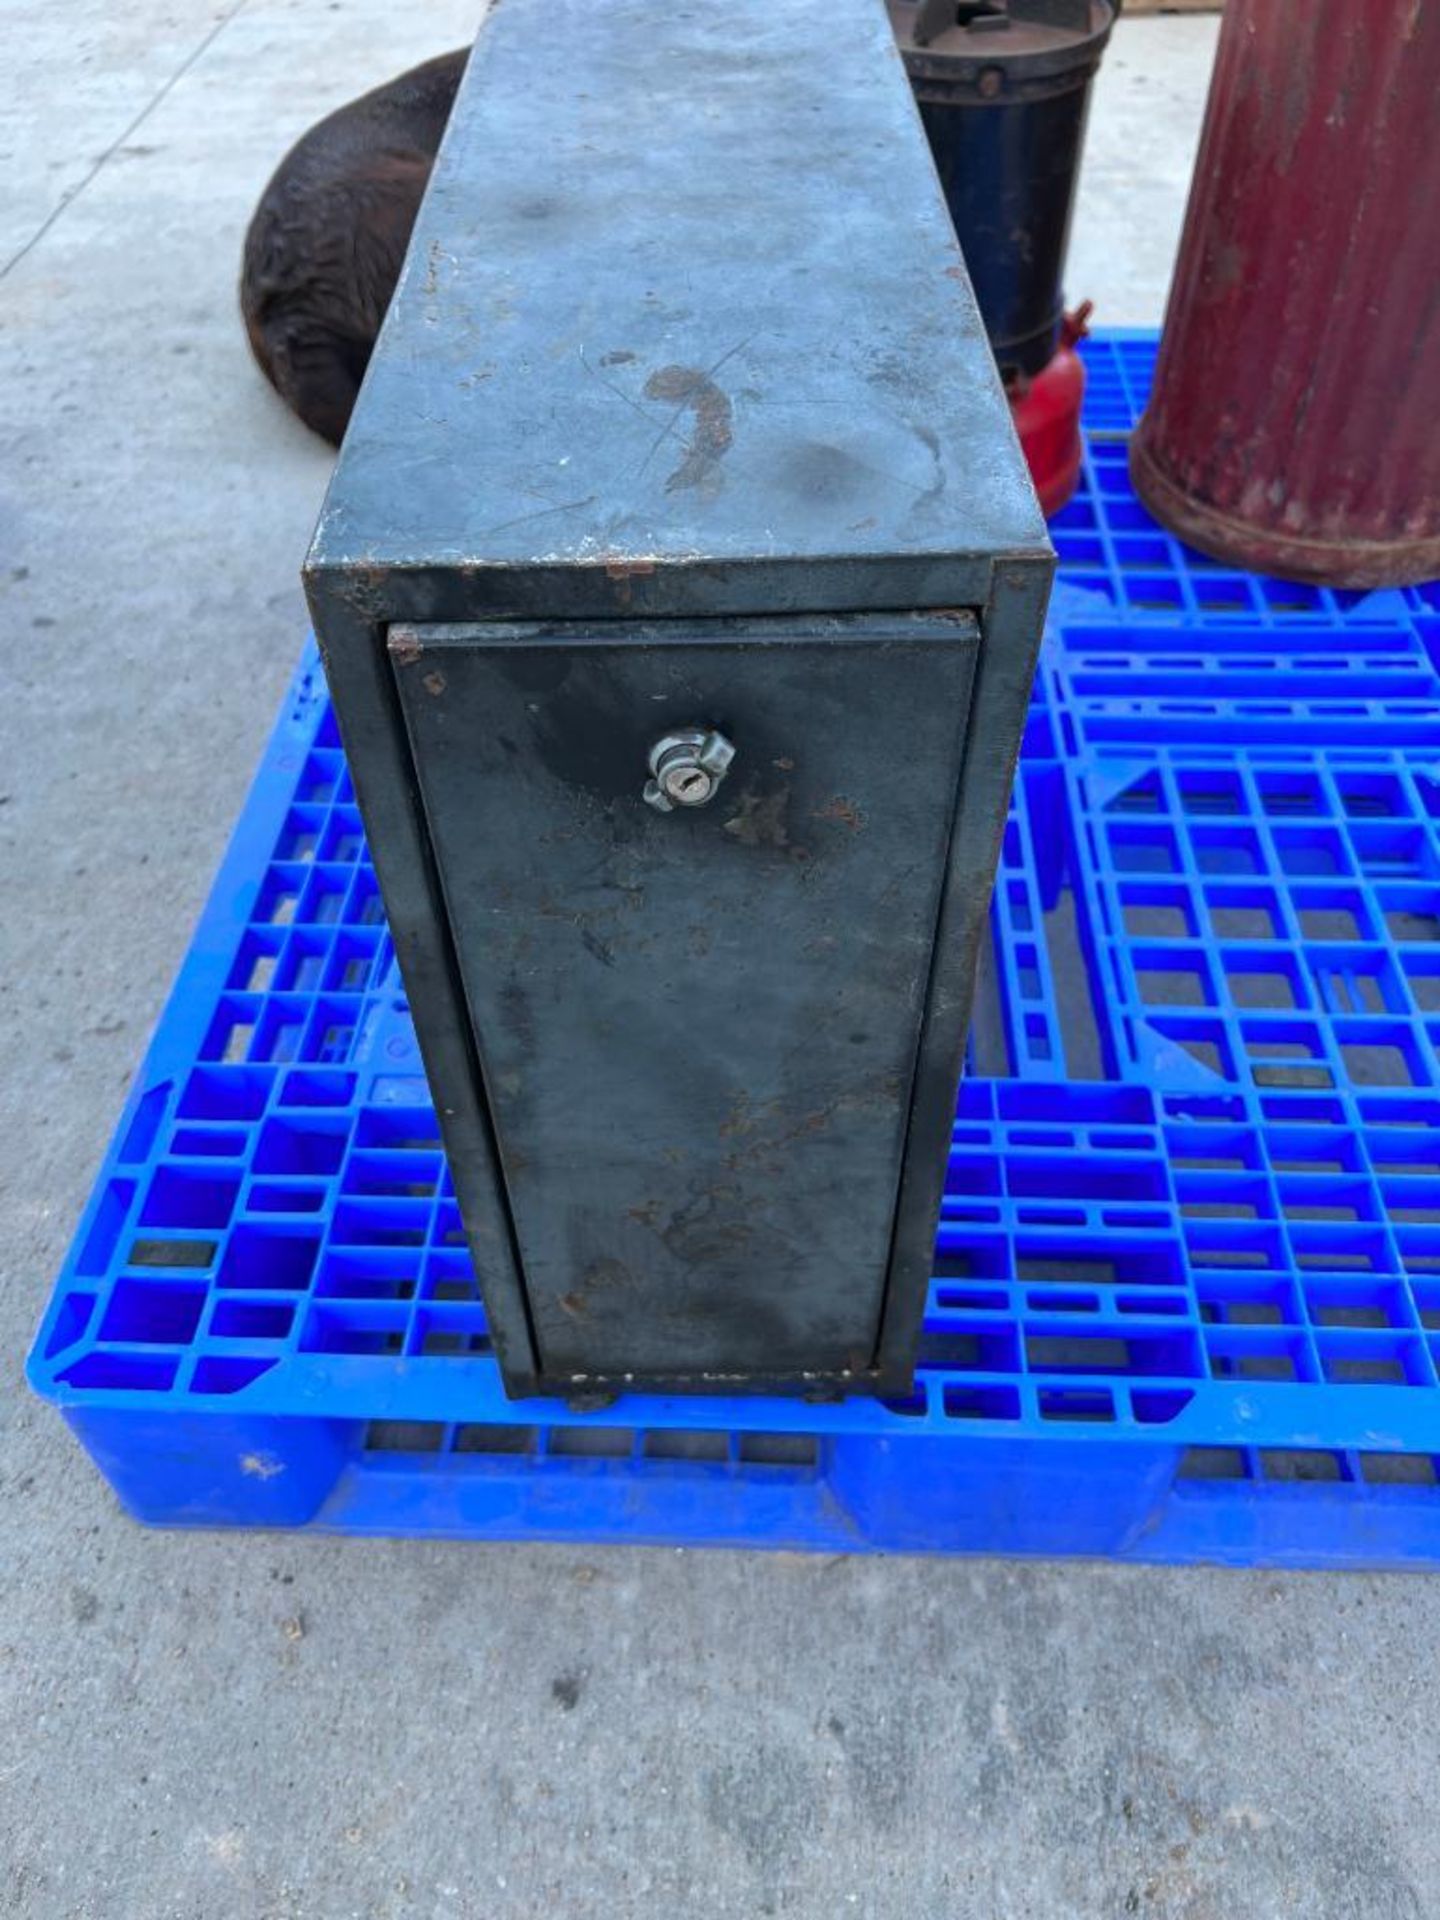 Tank, Propane Heater & Storage Box. Located in Altamont, IL - Image 5 of 5